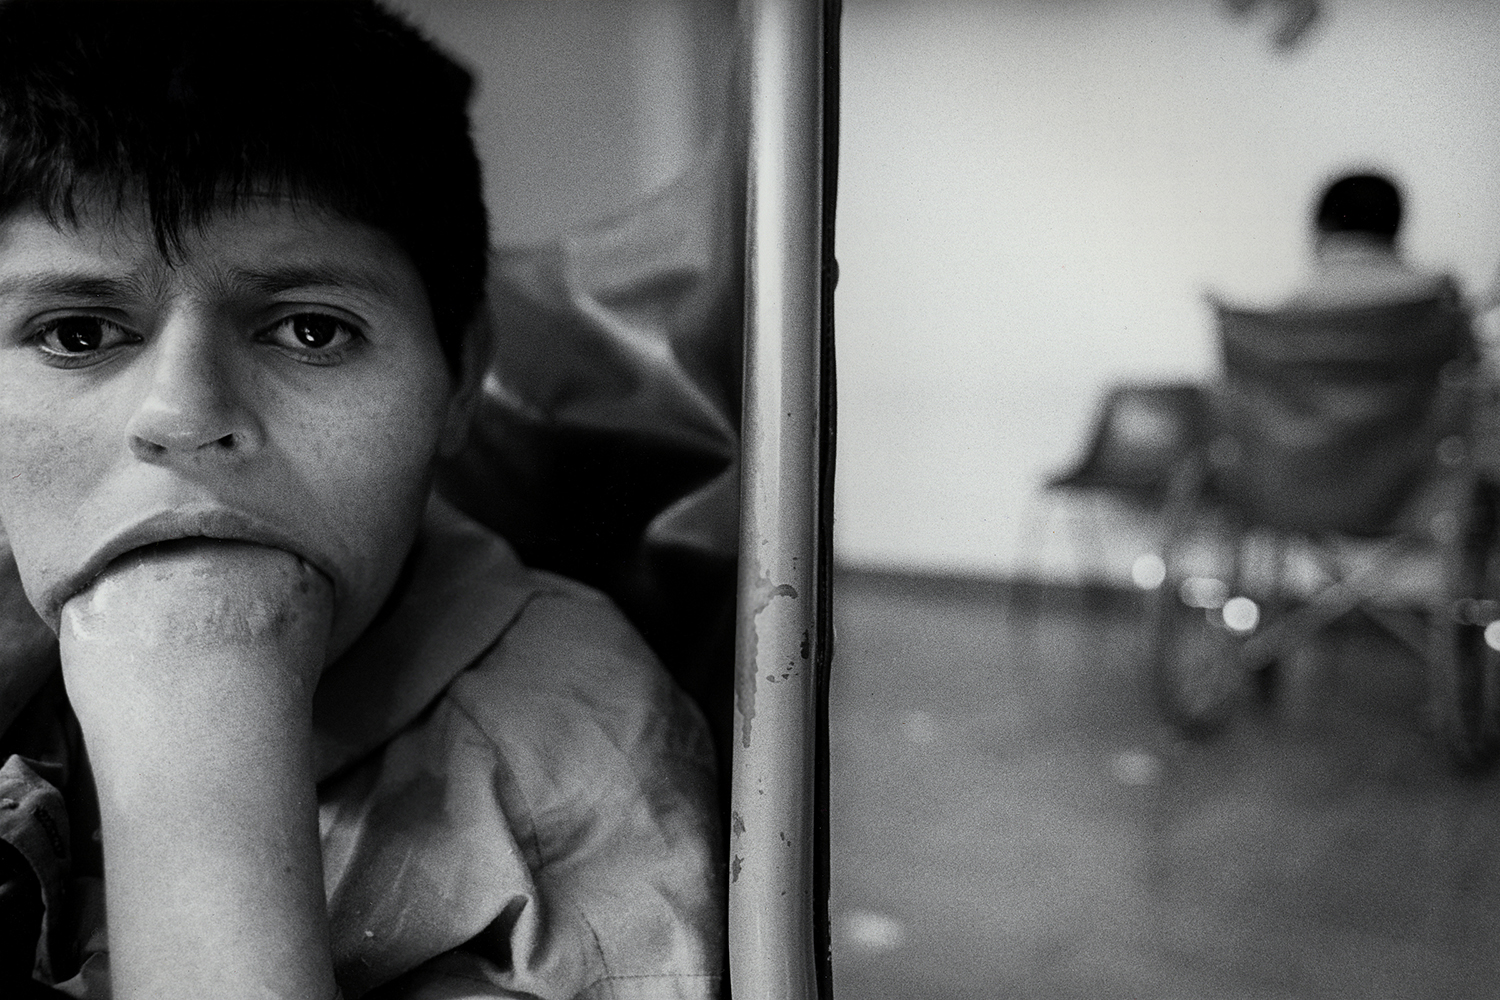   17-year-old girl abandoned at birth  Ocaranza Psychiatric Hospital Hidalgo, Mexico &nbsp;1999 